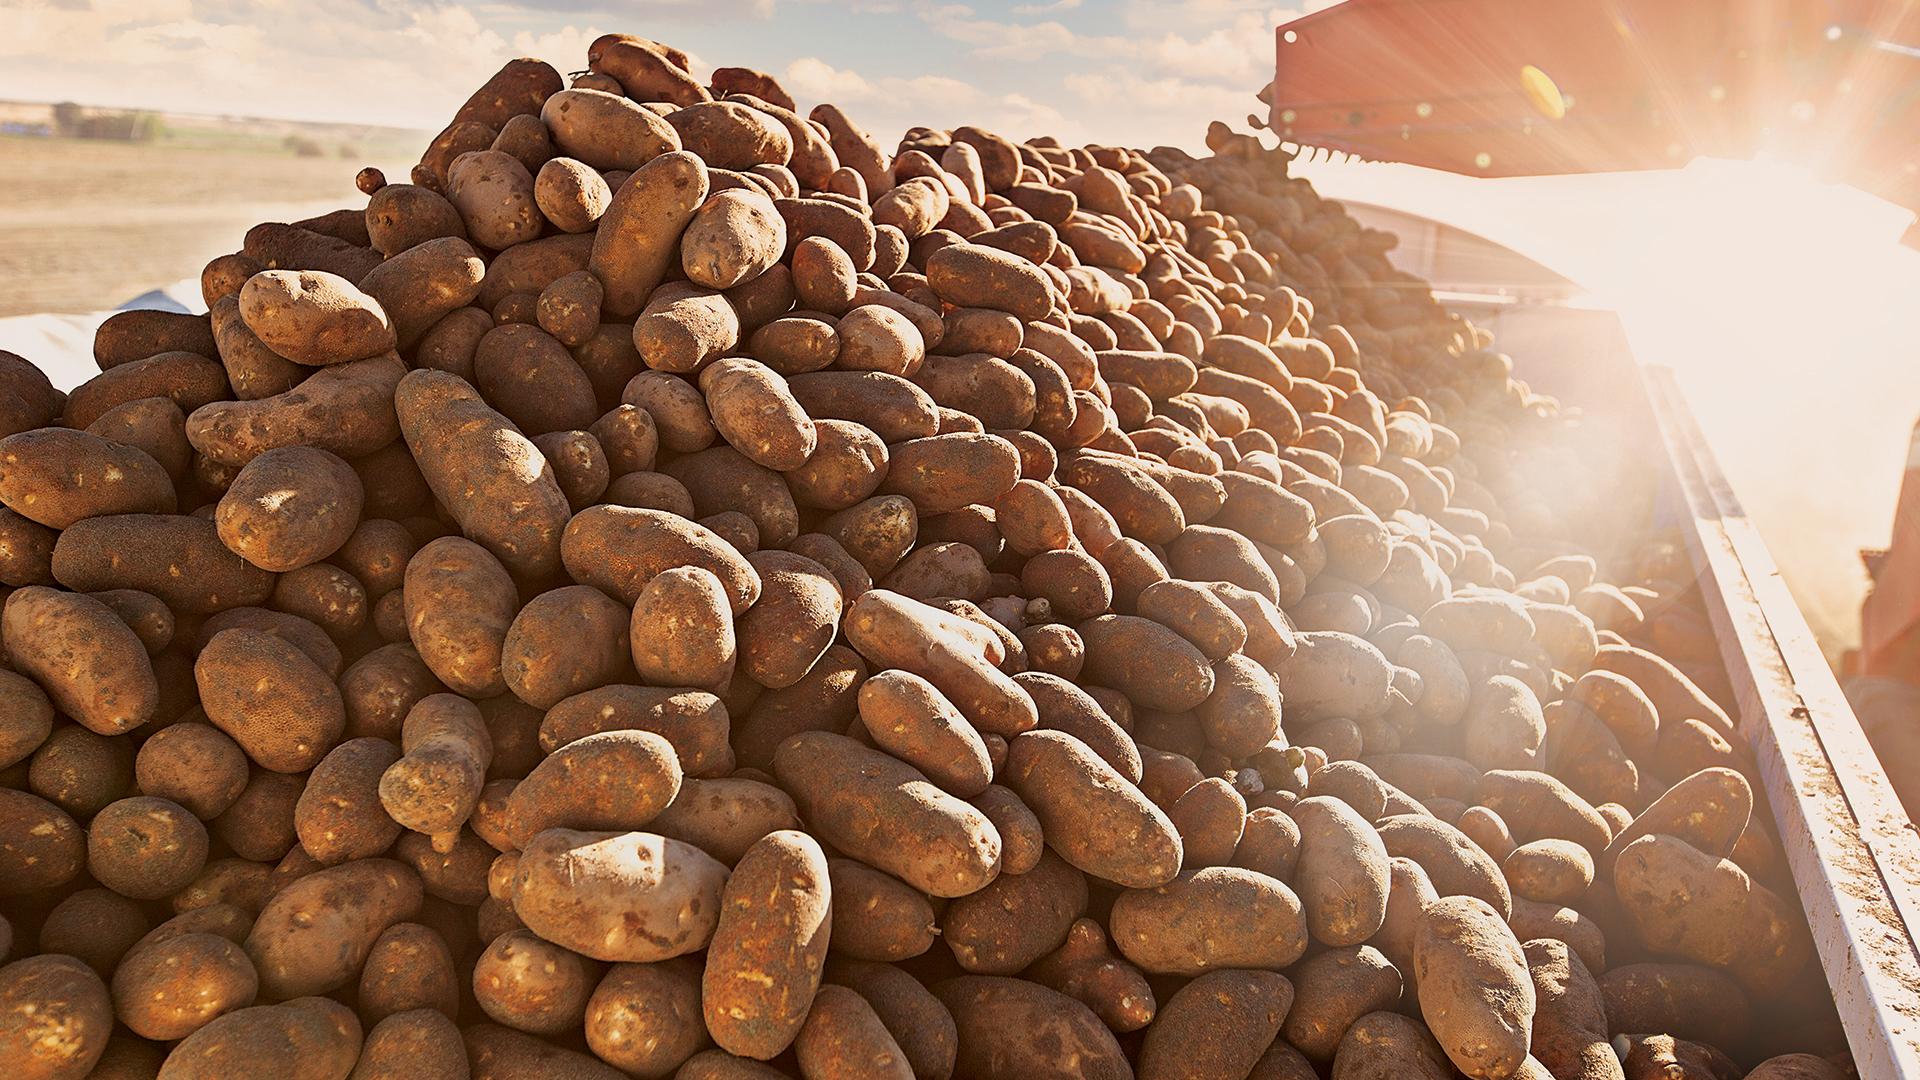 potato farm edit - PROBLEM POTATOES AT HARVEST |馬鈴薯農場編輯-收穫中的問題土豆| PART 1第XNUMX部分